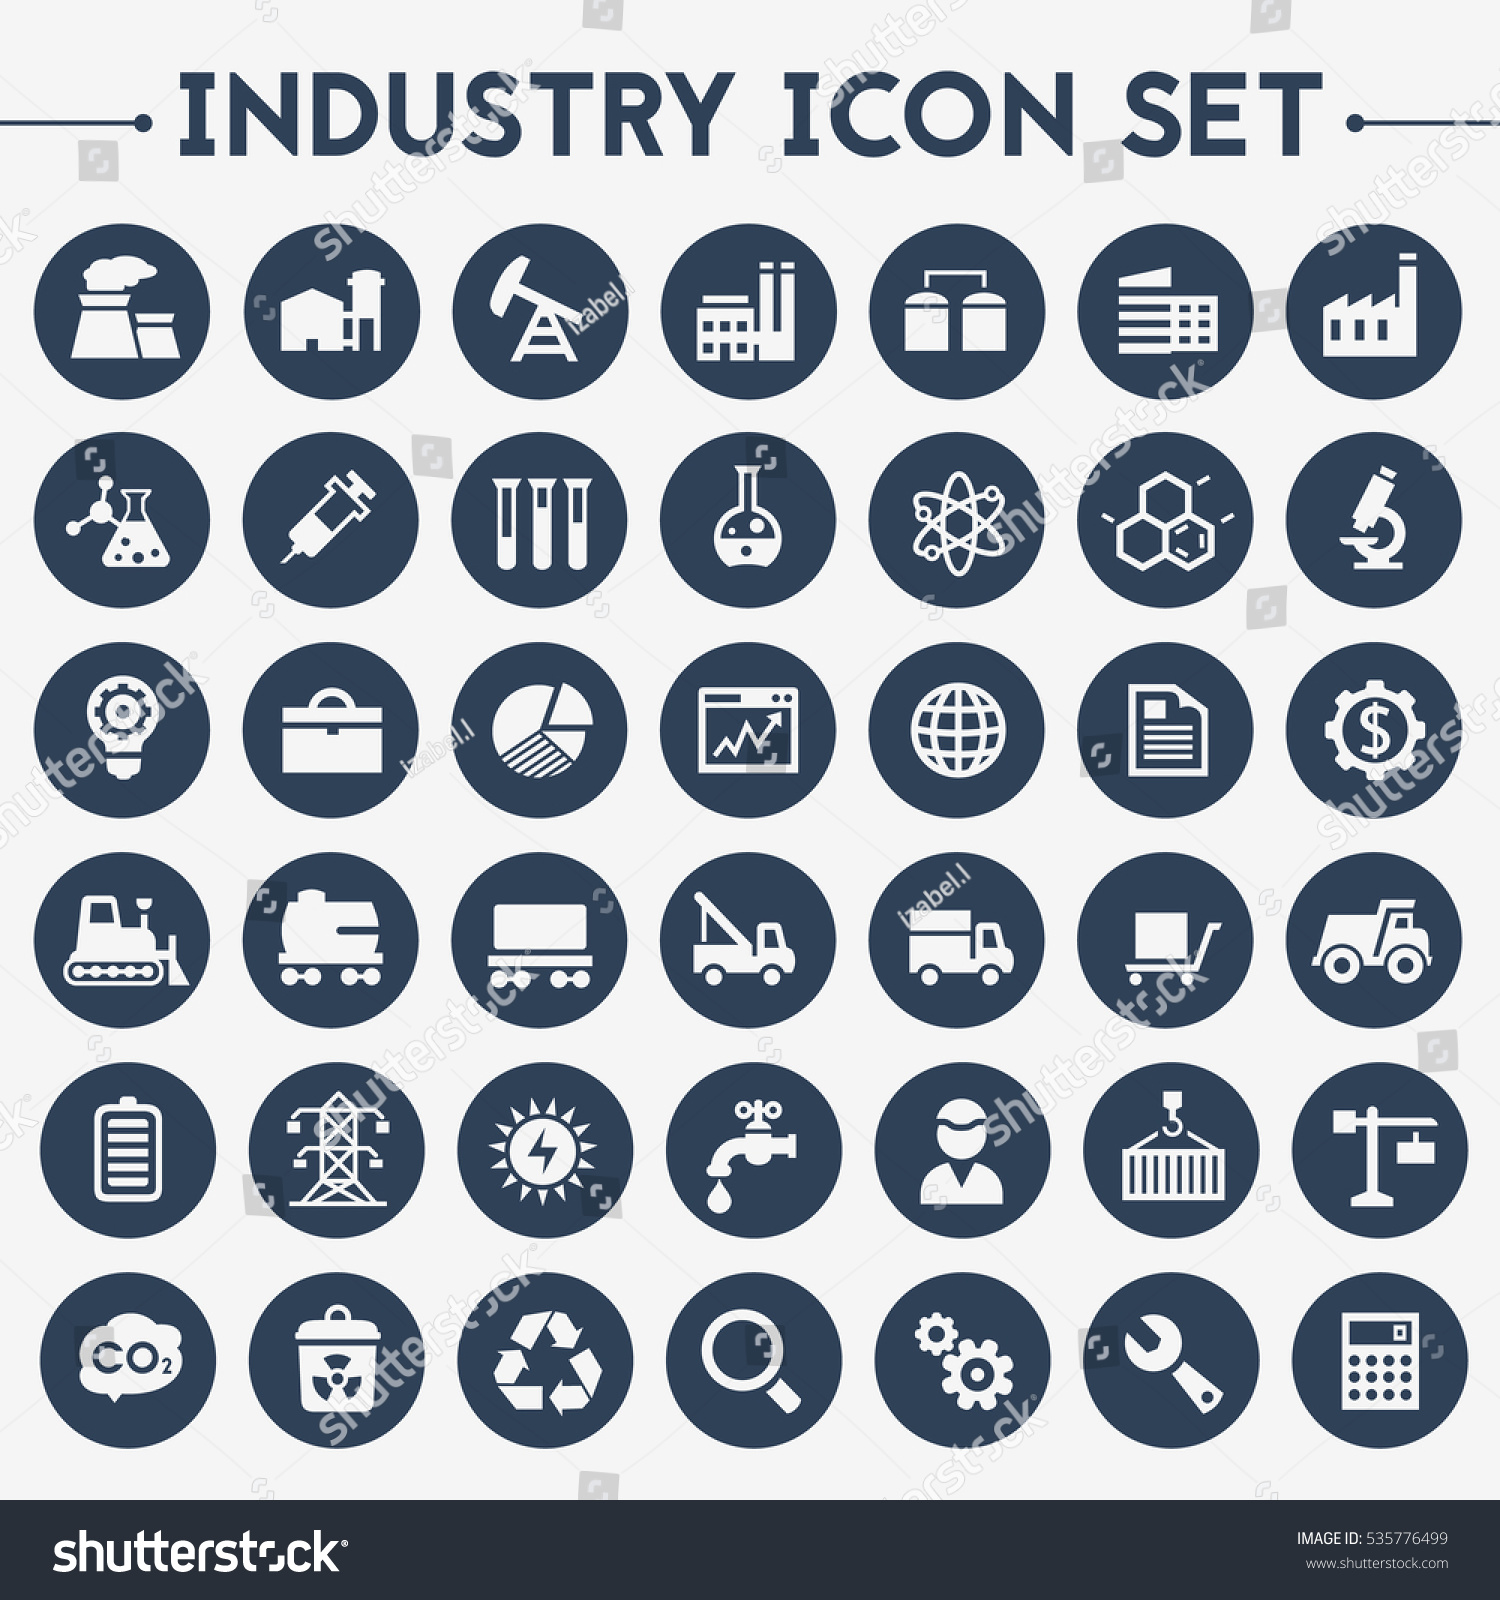 Big Industry icon set #535776499